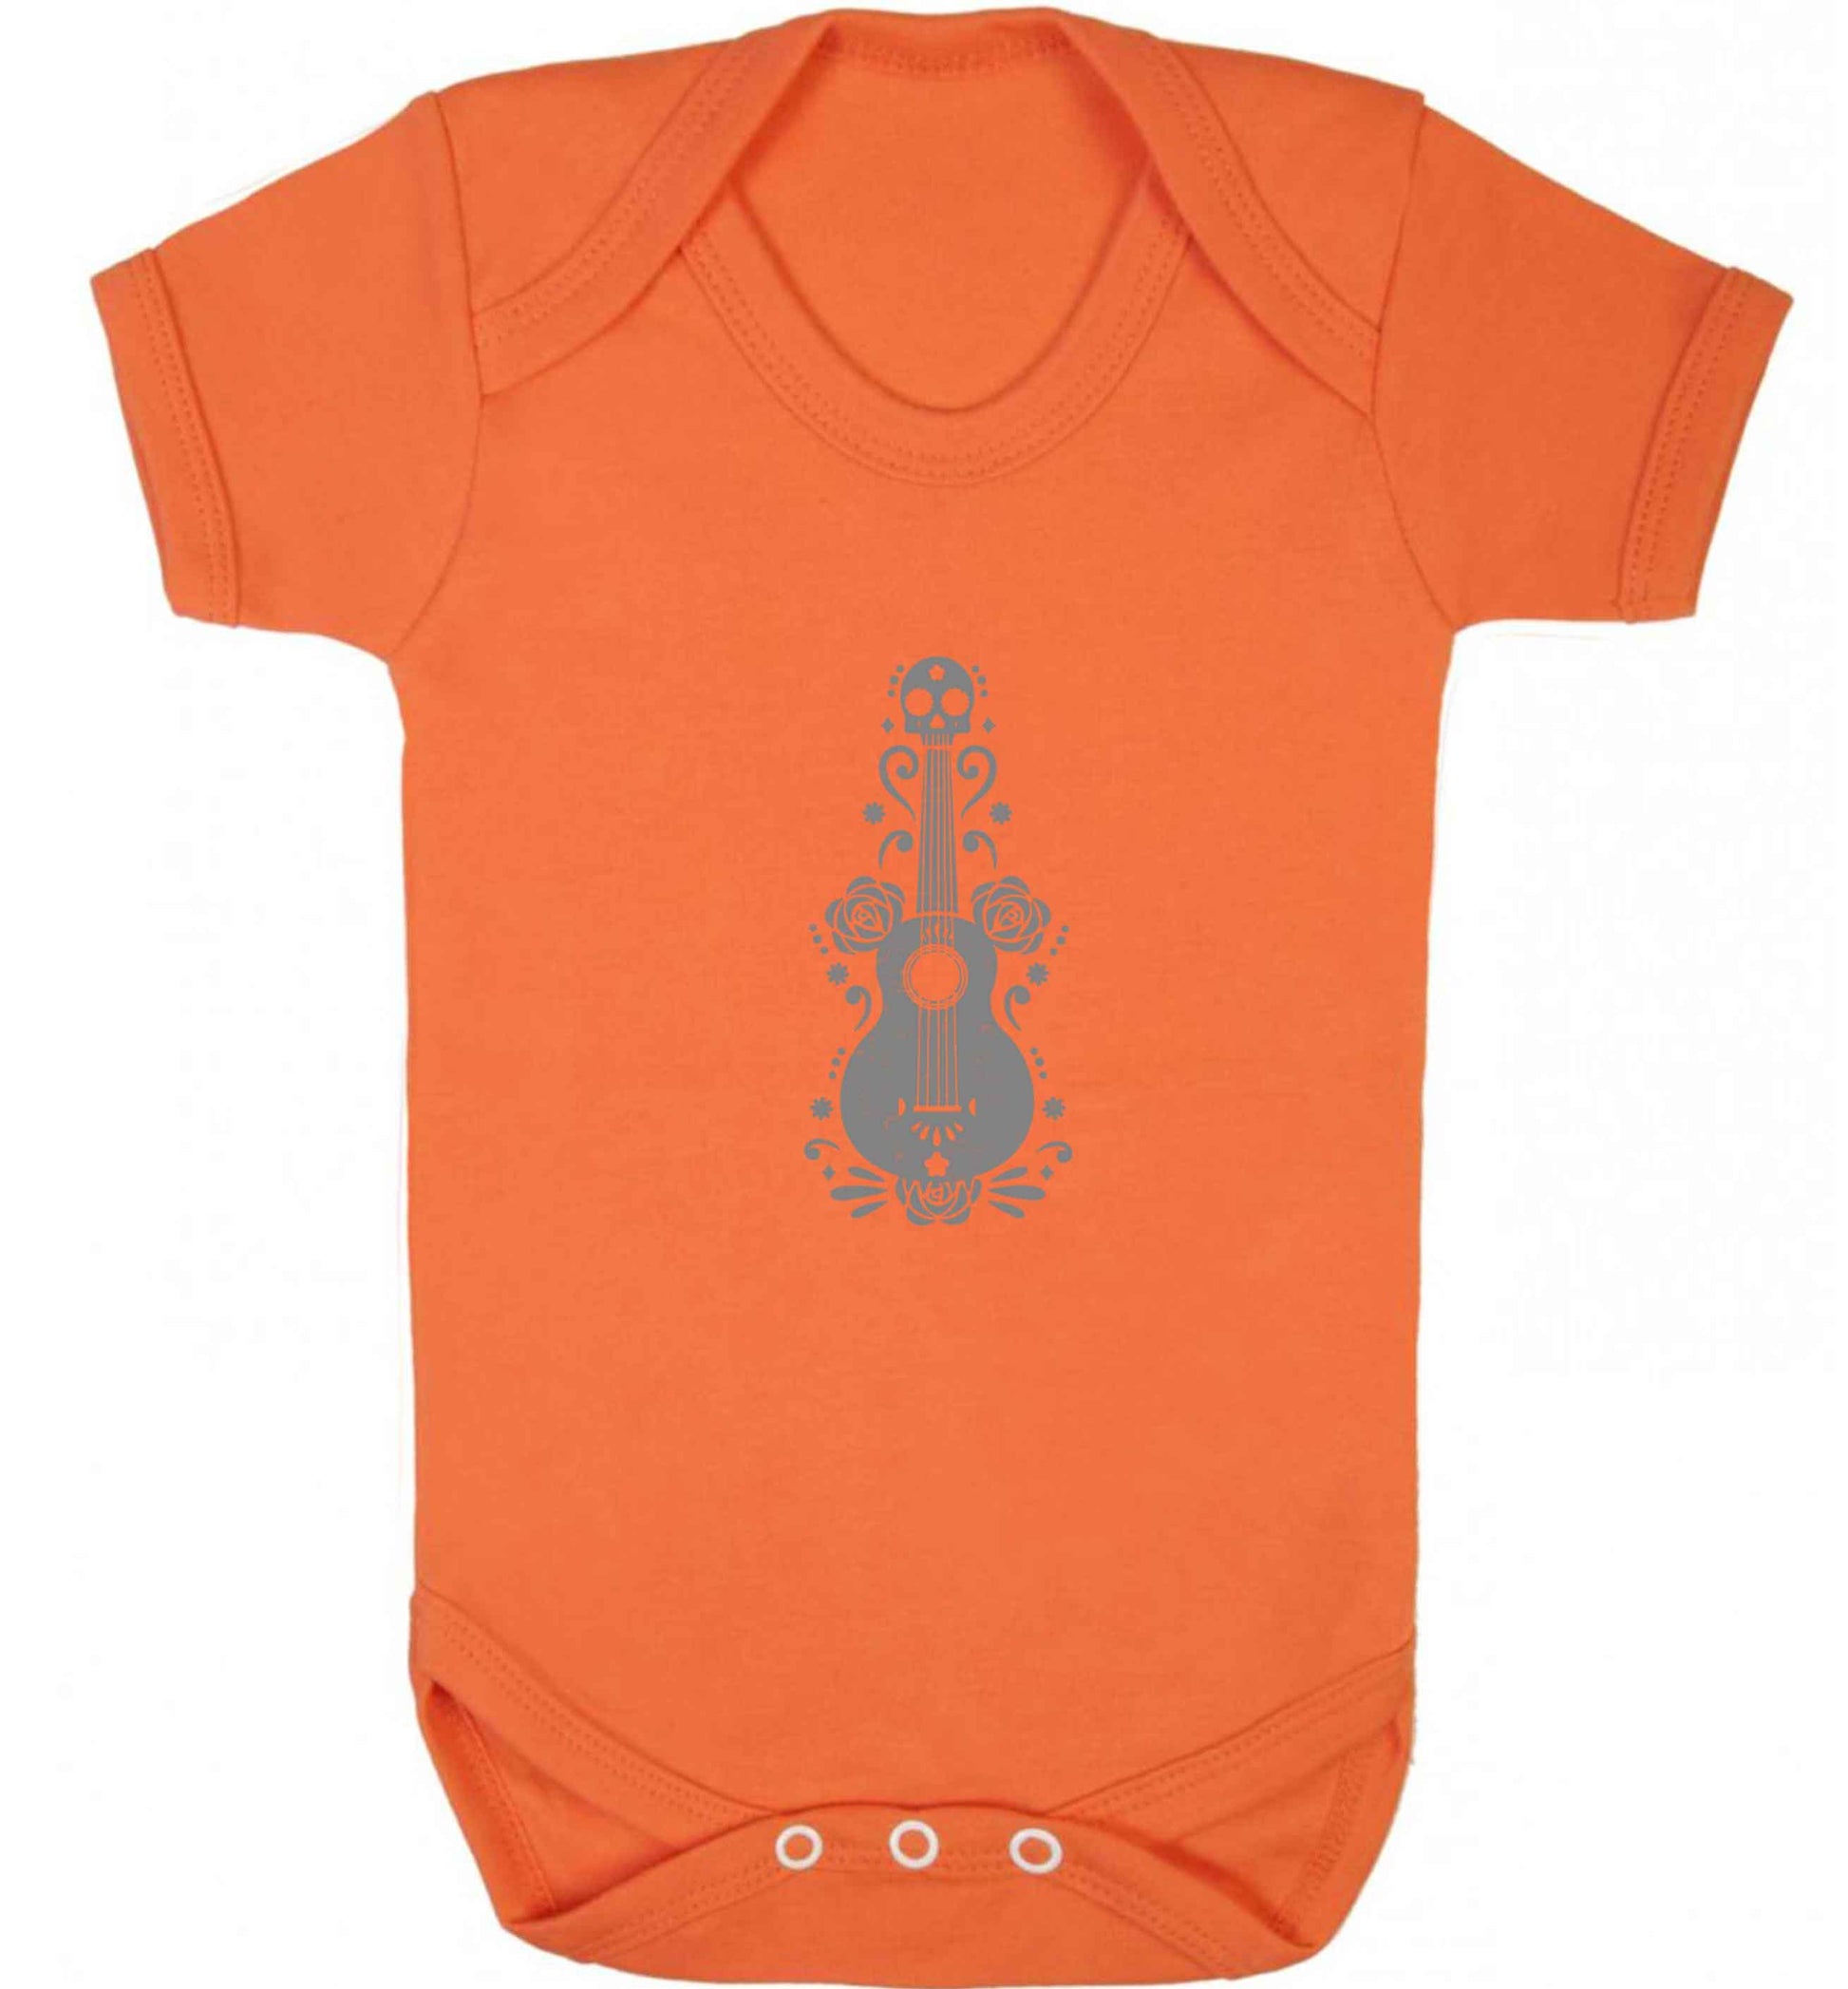 Guitar skull illustration baby vest orange 18-24 months